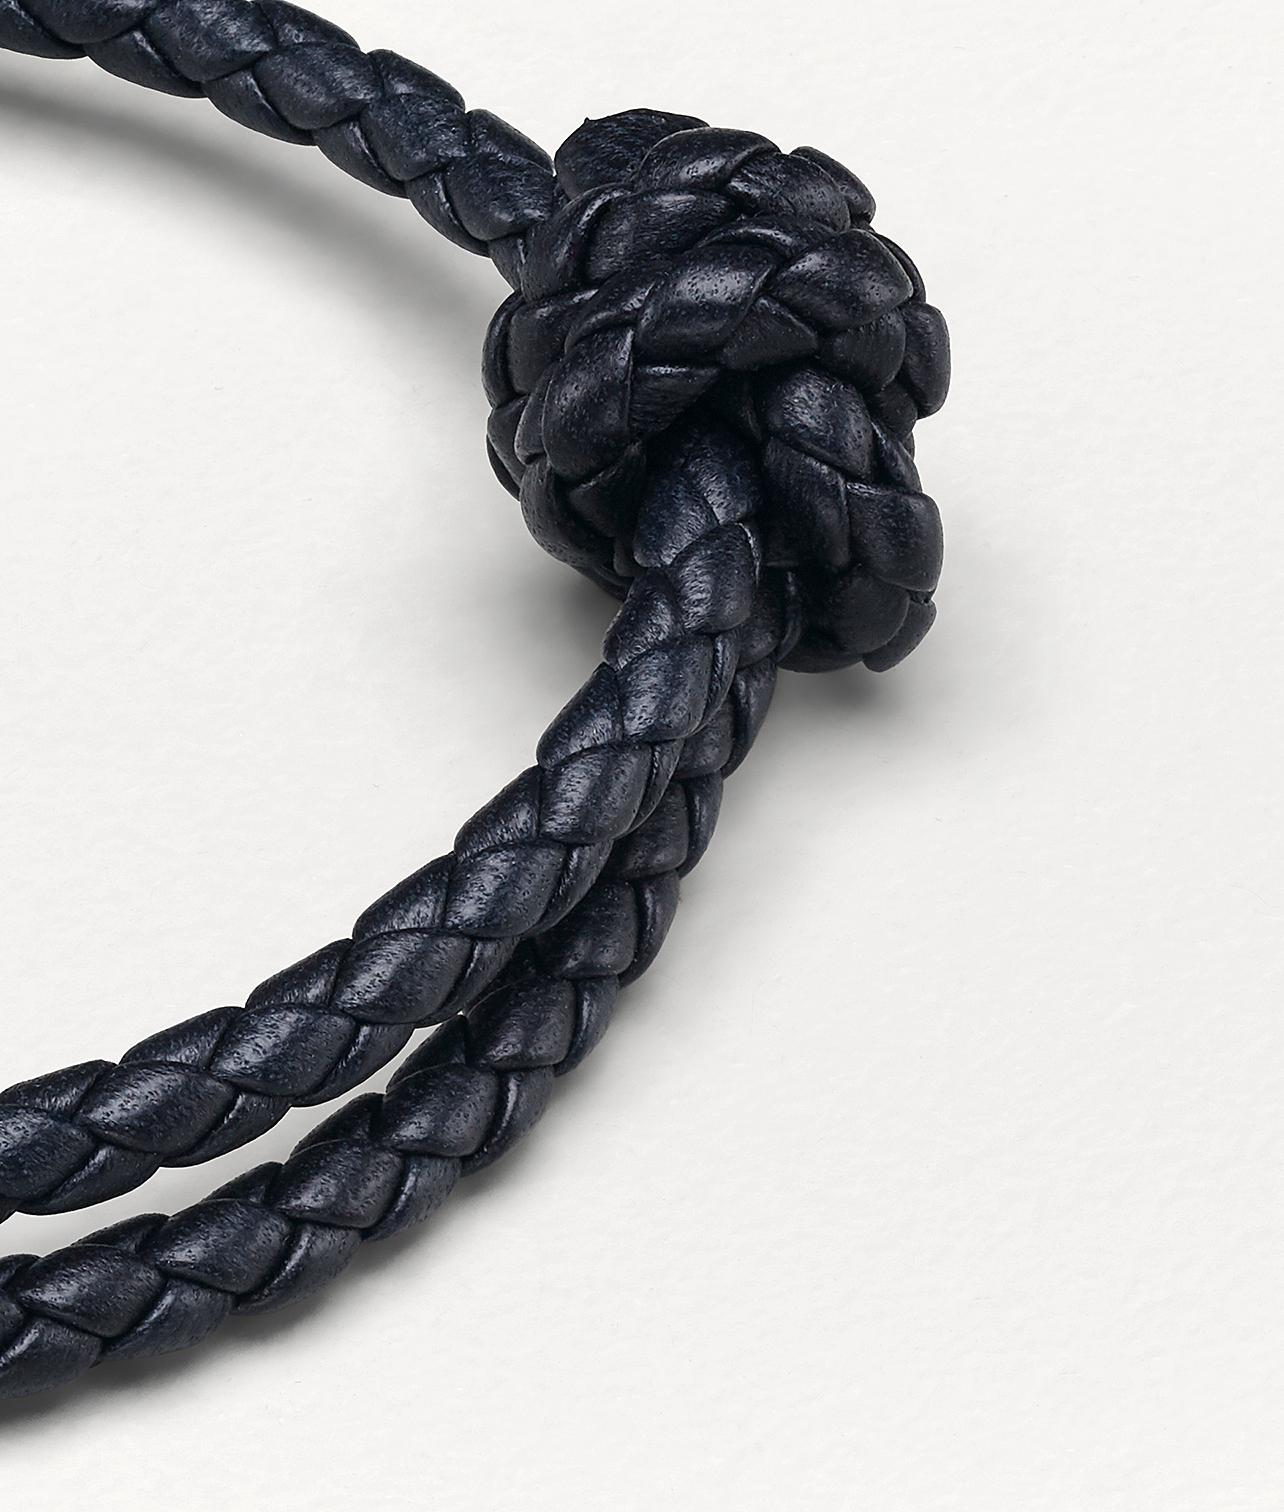 Bottega Veneta® Men's Braid Leather Bracelet in Black. Shop online now.